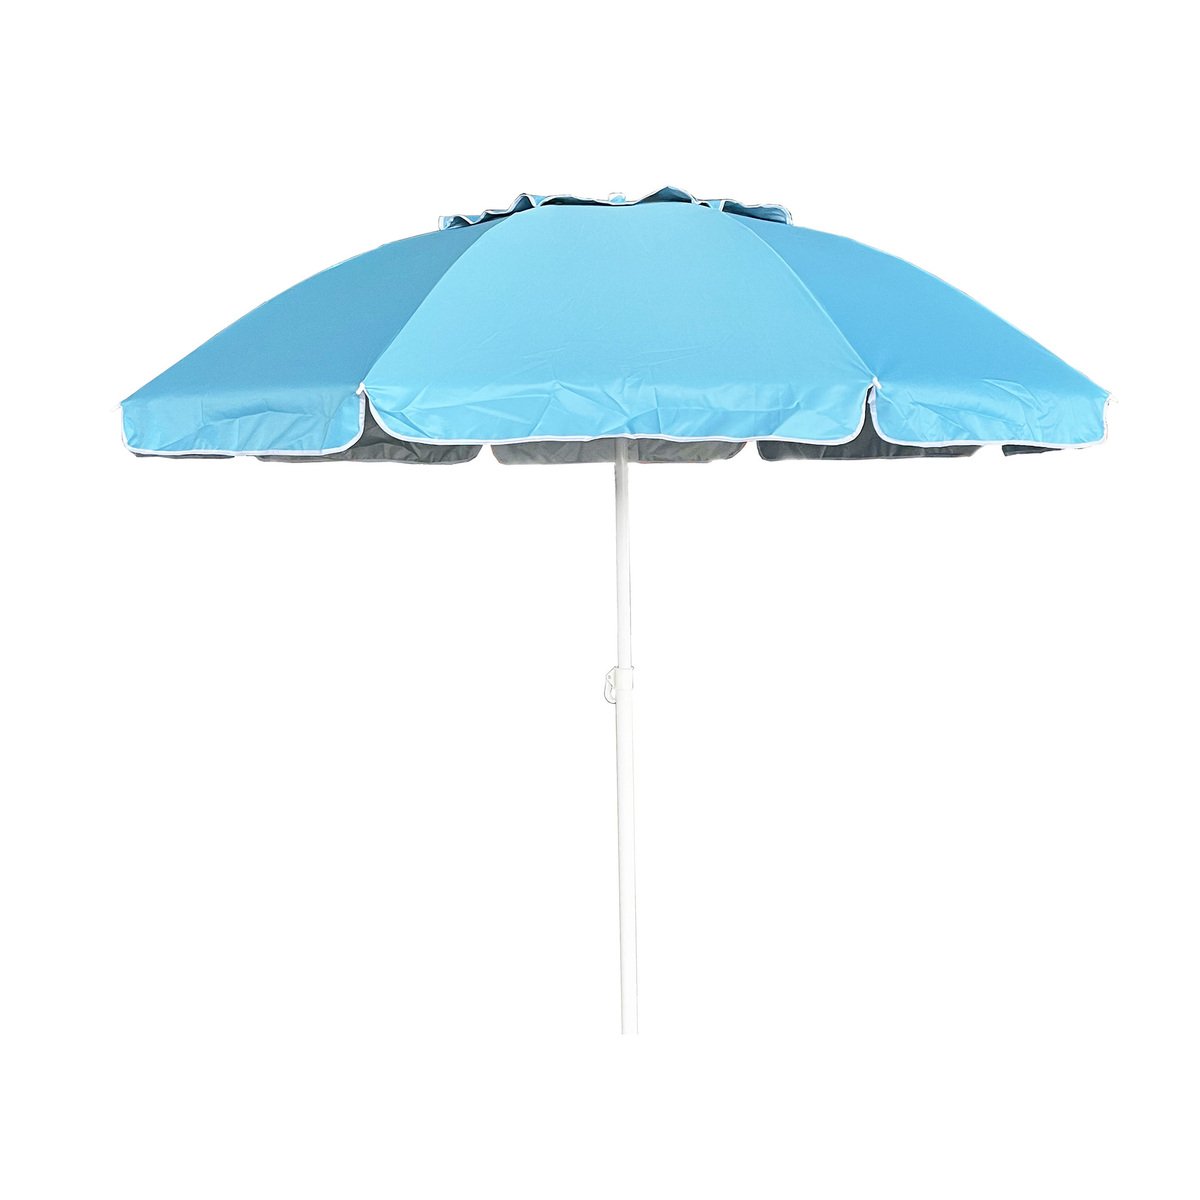 Royal Relax Beach Umbrella HYH-181 2mtr Assorted Design & Color